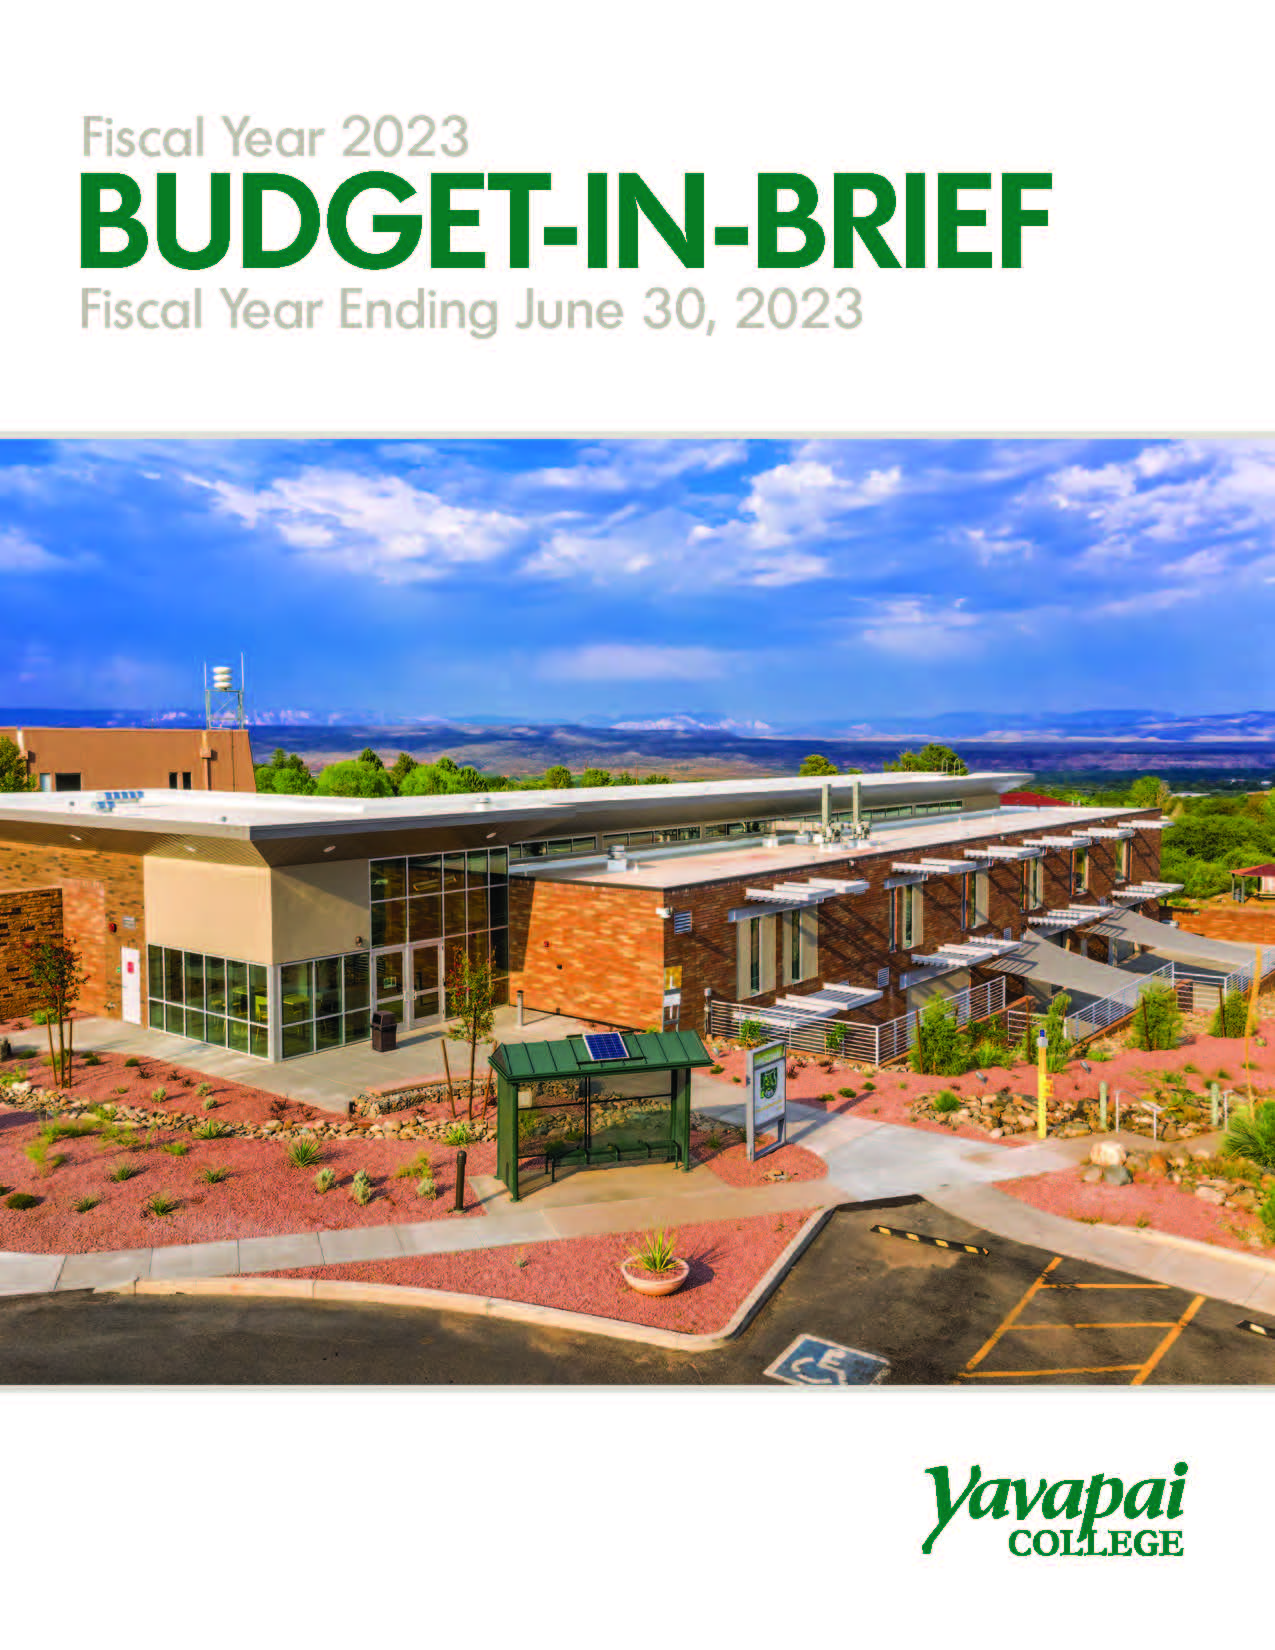 Budget cover